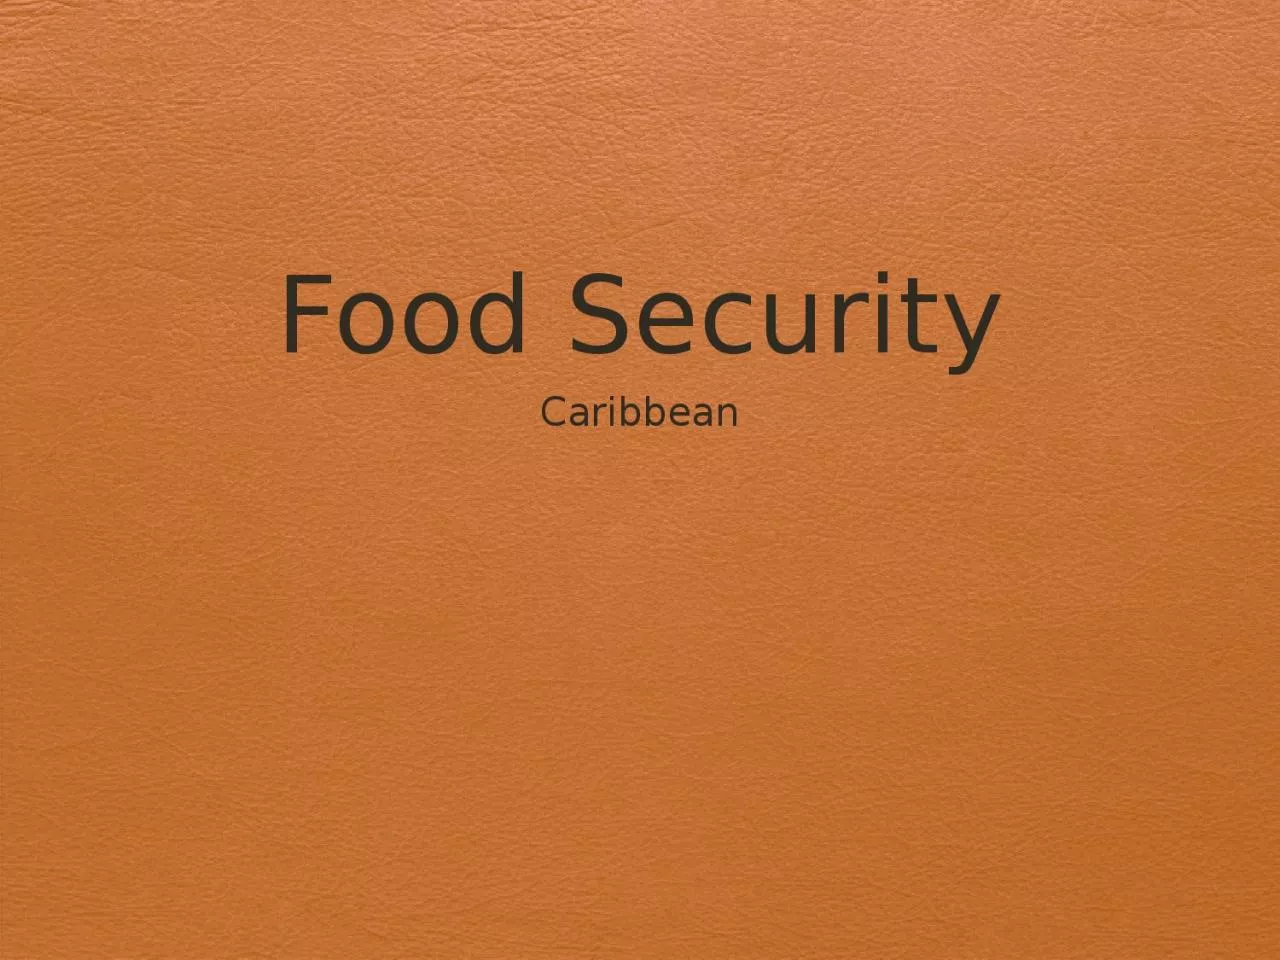 Food Security Caribbean 15 Countries of CARICOM